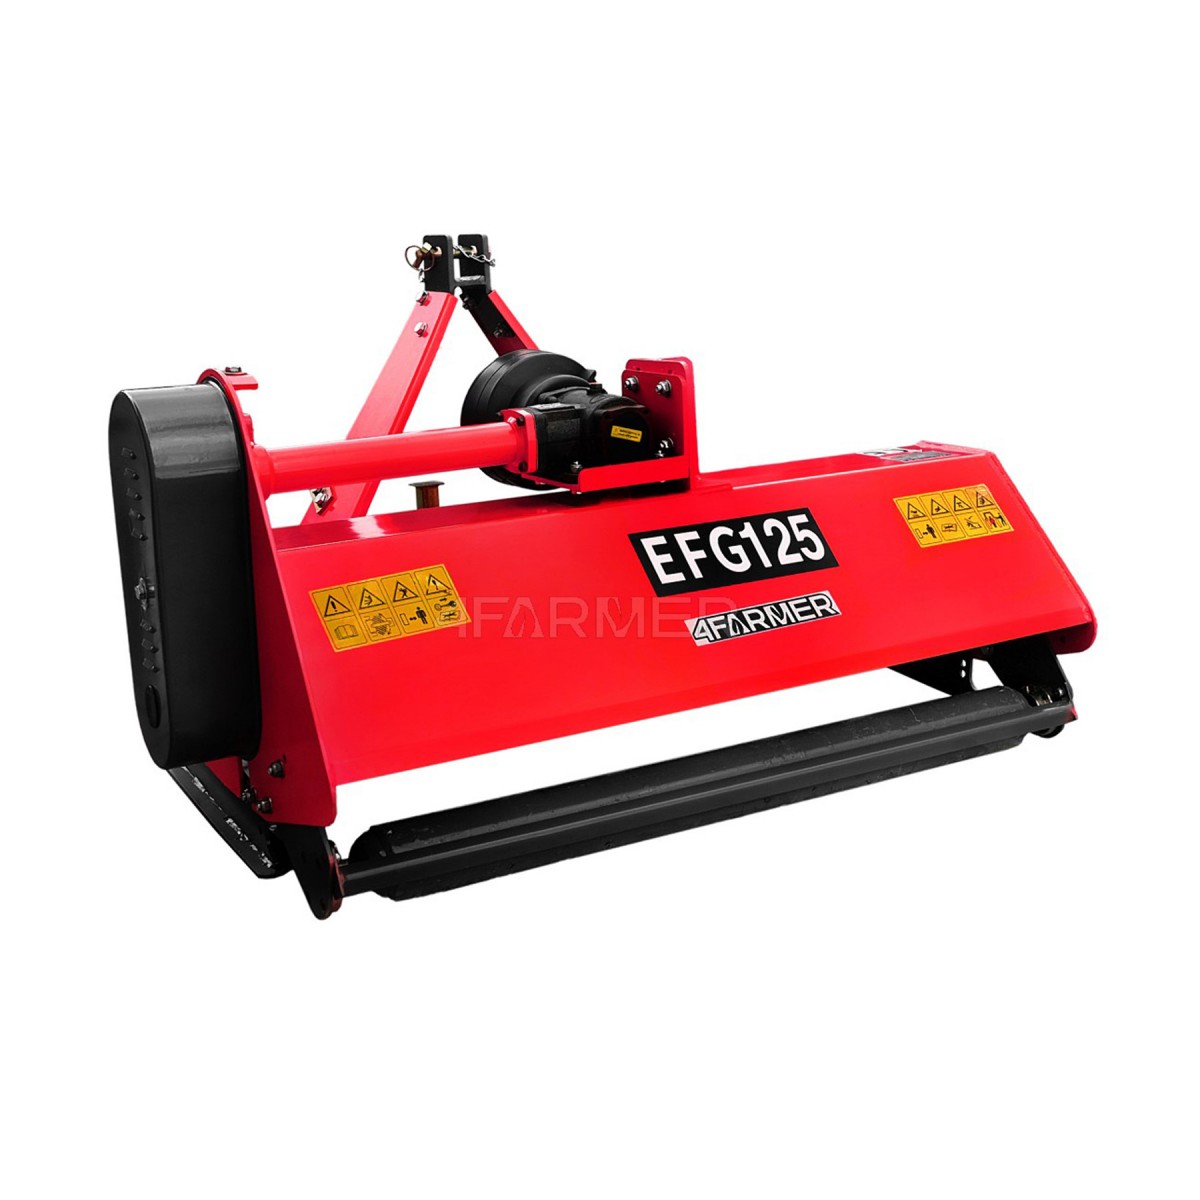 EFG 125 4FARMER flail mower - red